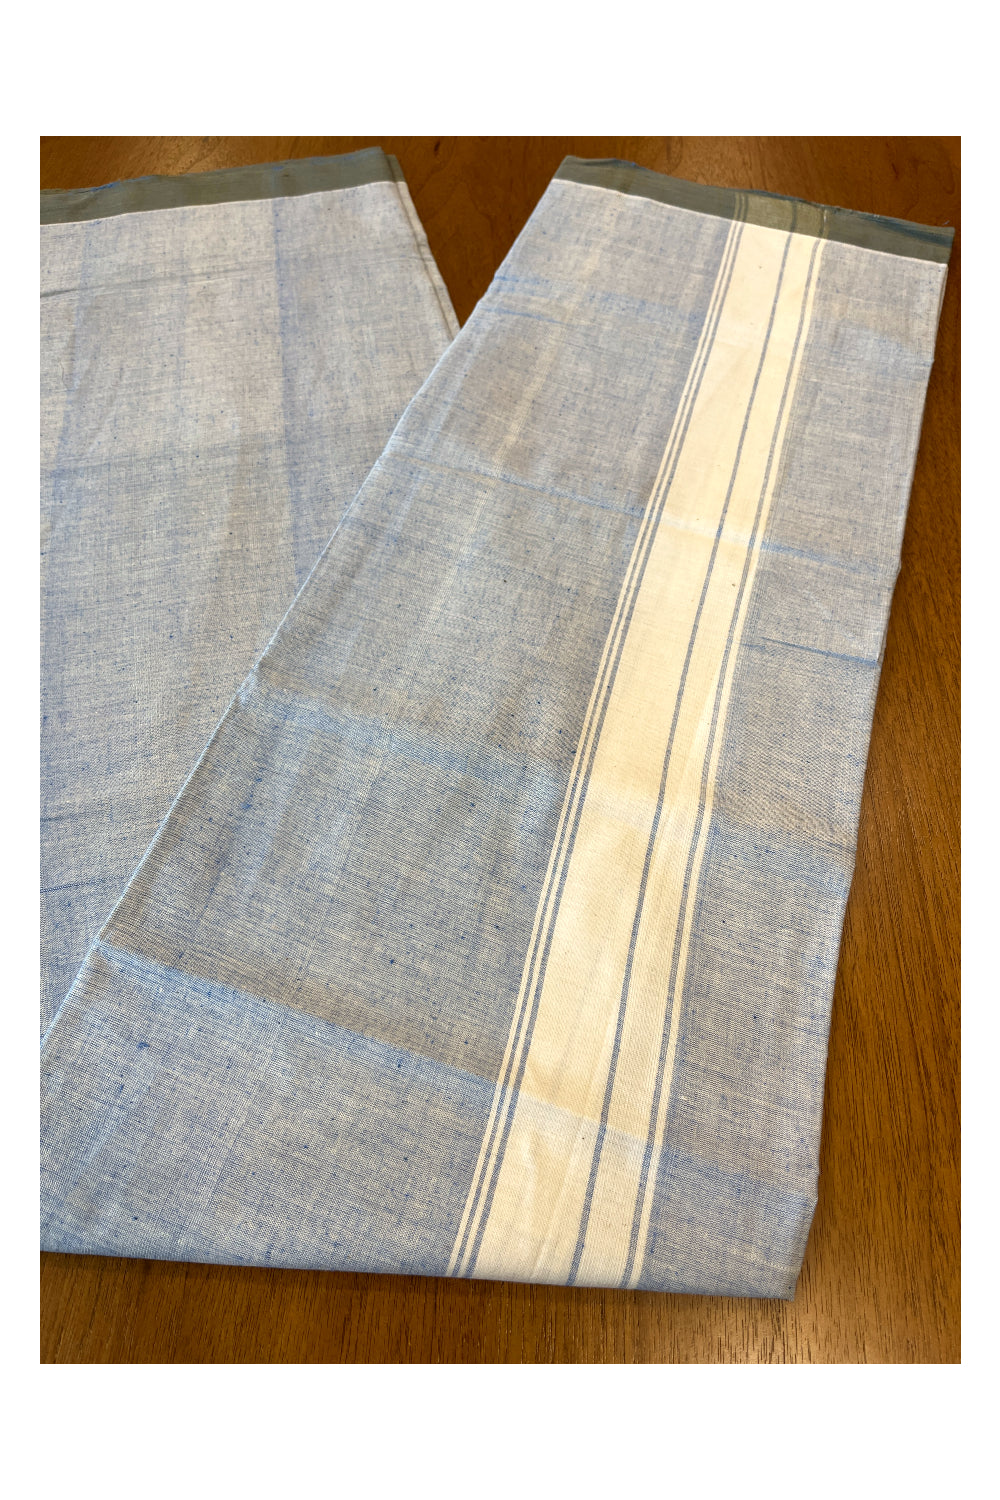 Southloom Premium Handloom Blue Shaded Solid Single Mundu (Lungi) with White Border